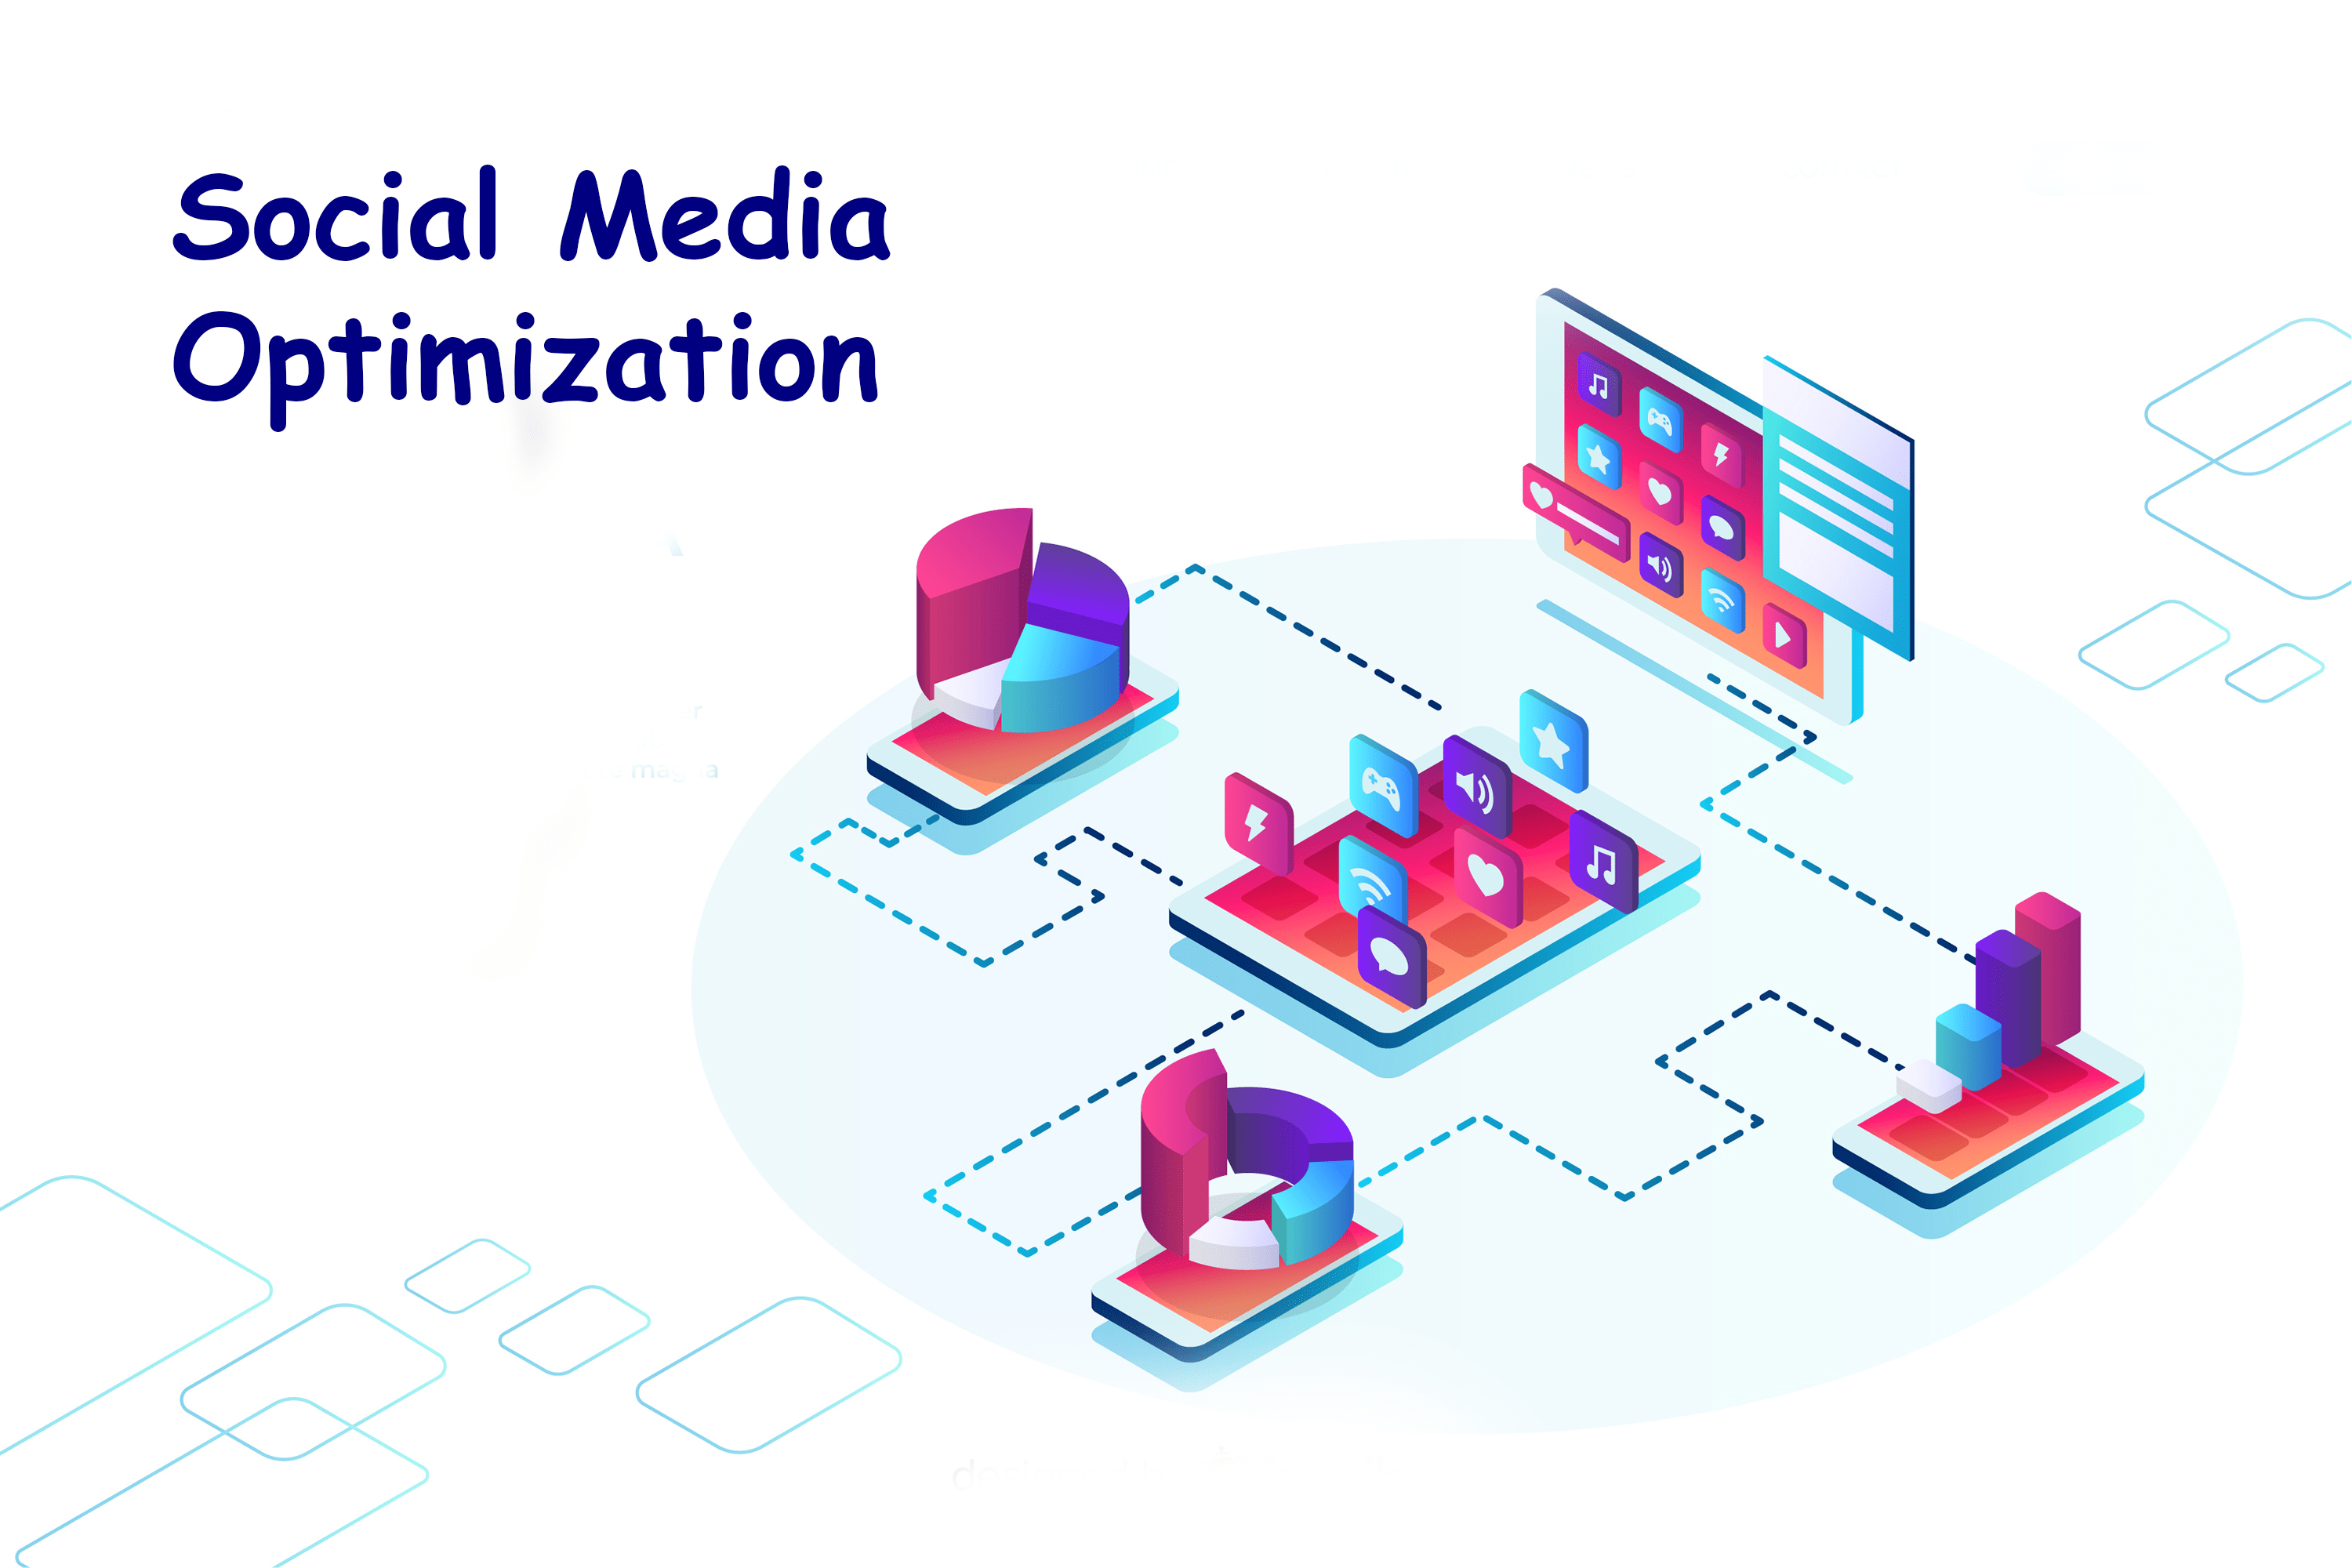 Social media optimization TeleMatrix Global